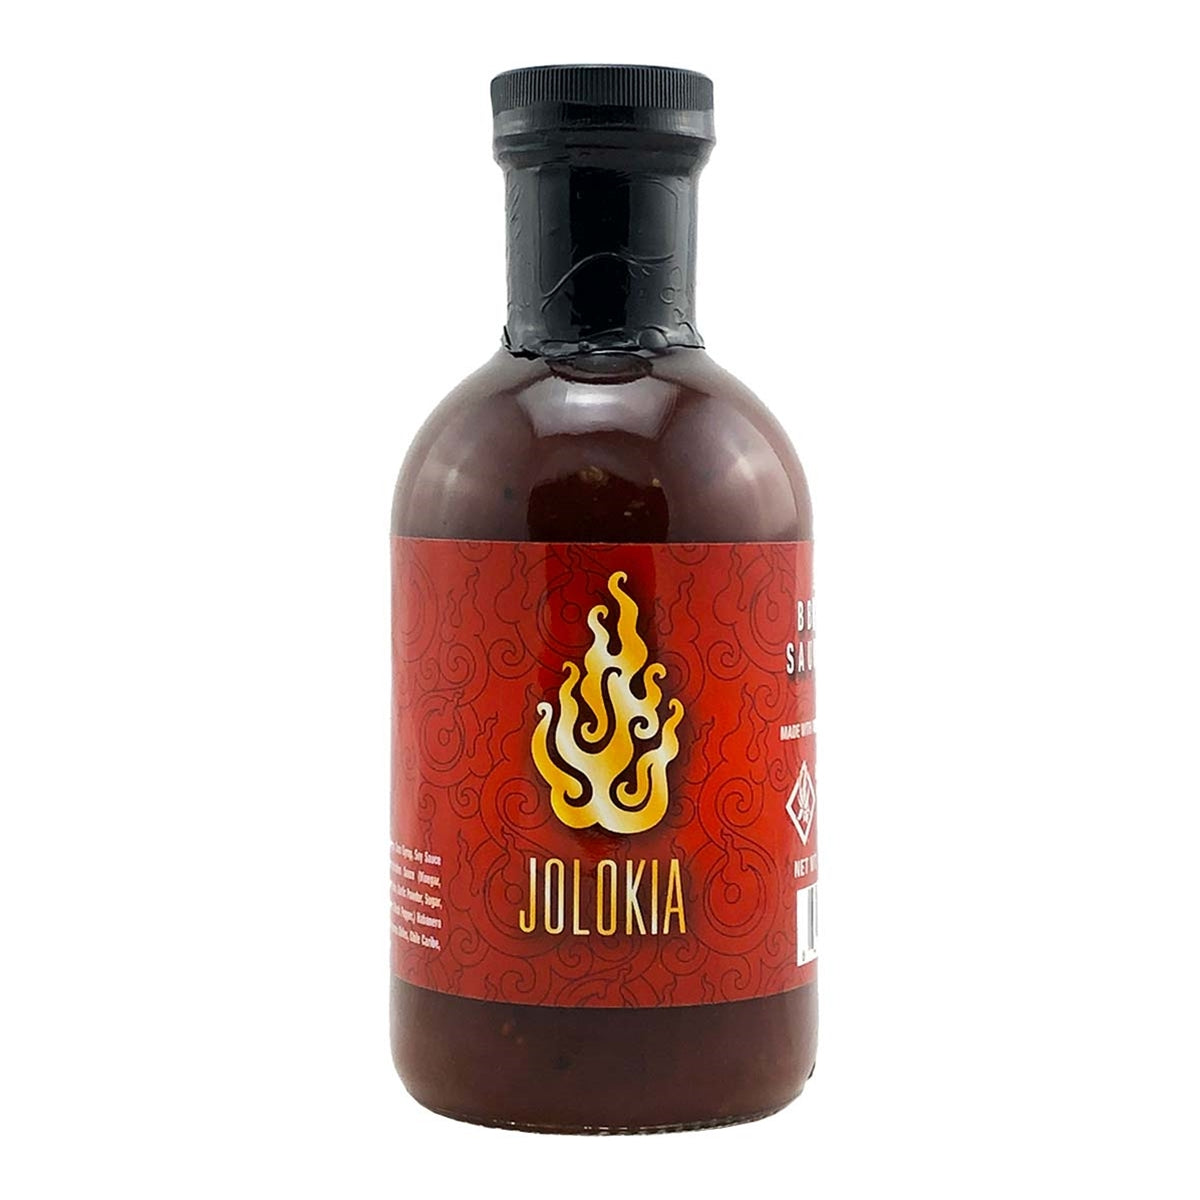 Cajohn's Jolokia Barbecue Sauce